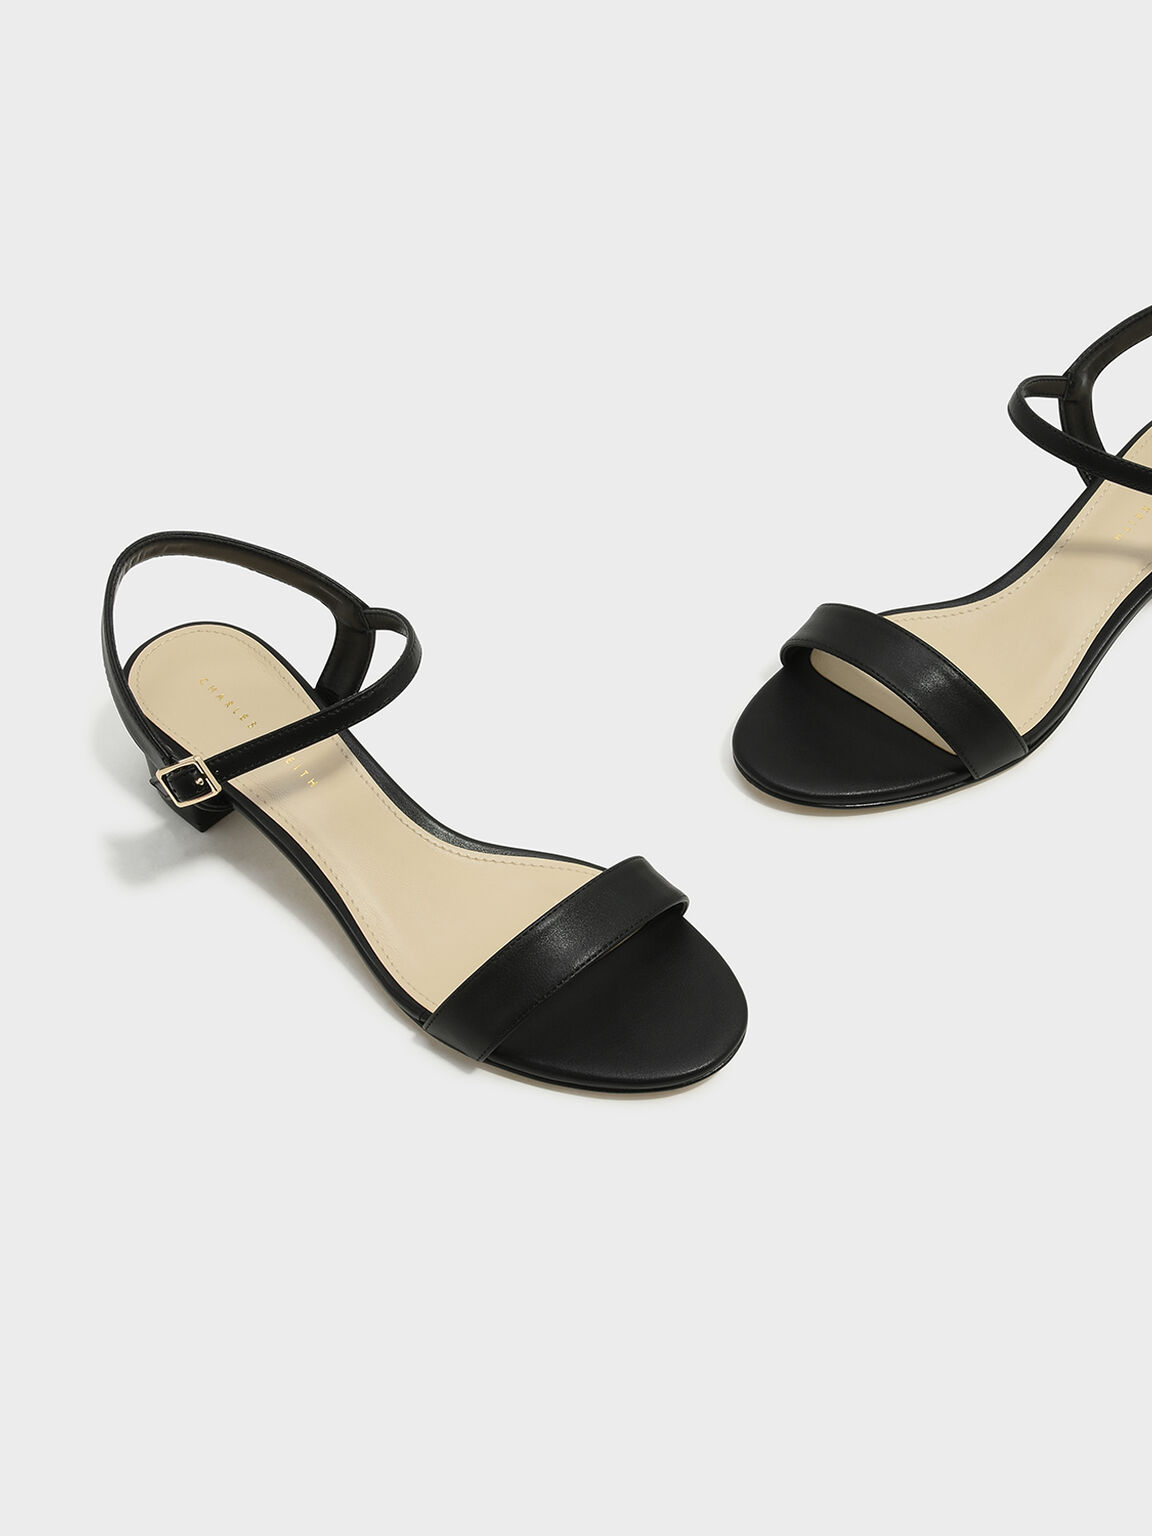 Basic Open-Toe Sandals, Black, hi-res